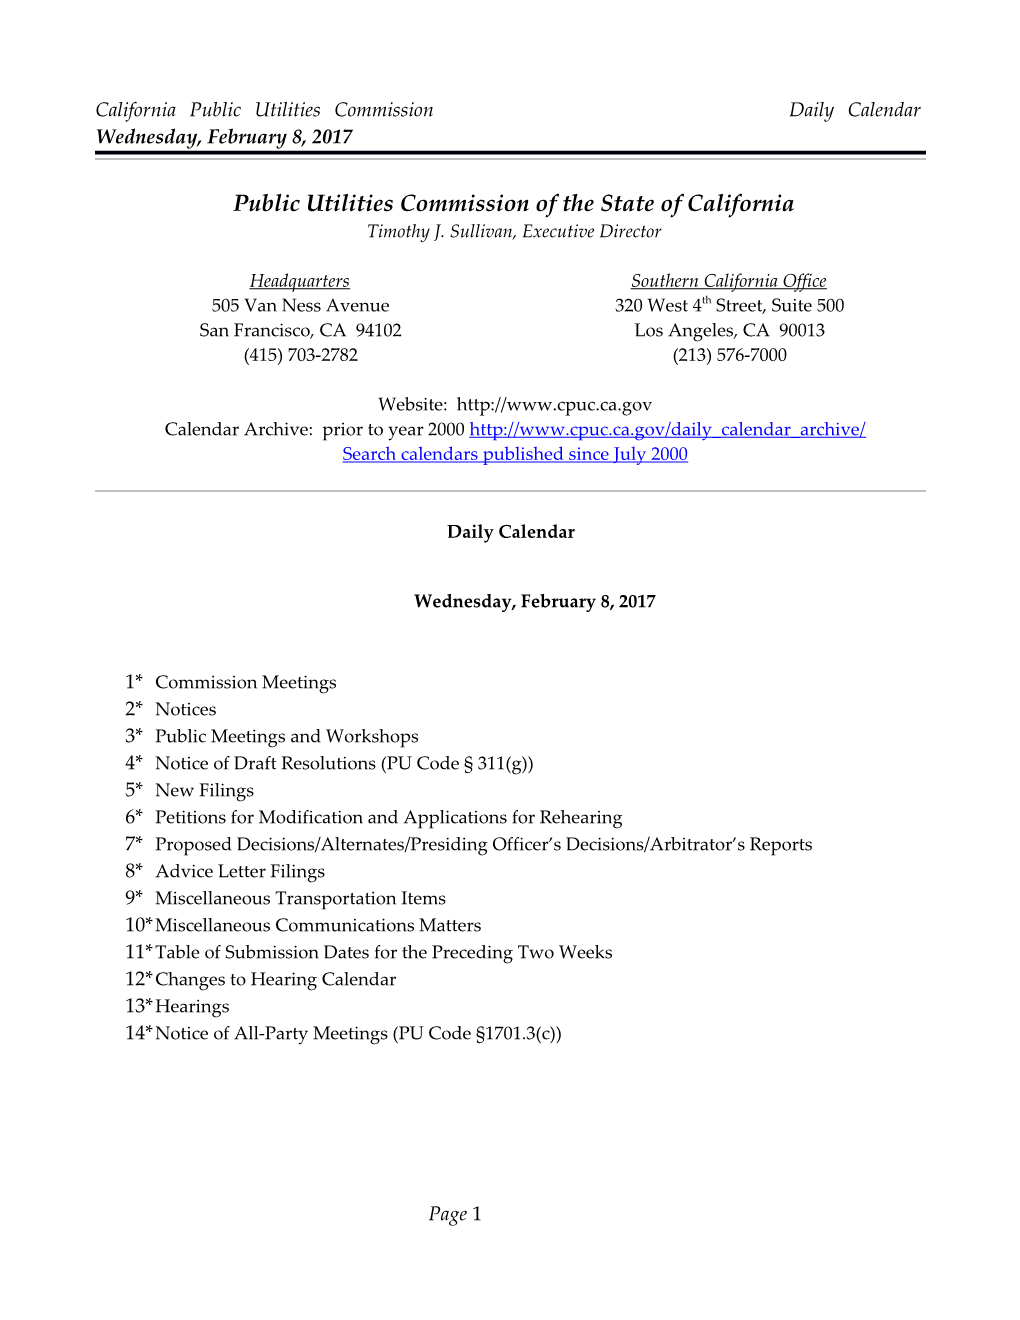 California Public Utilities Commission Daily Calendar Wednesday, February 8, 2017